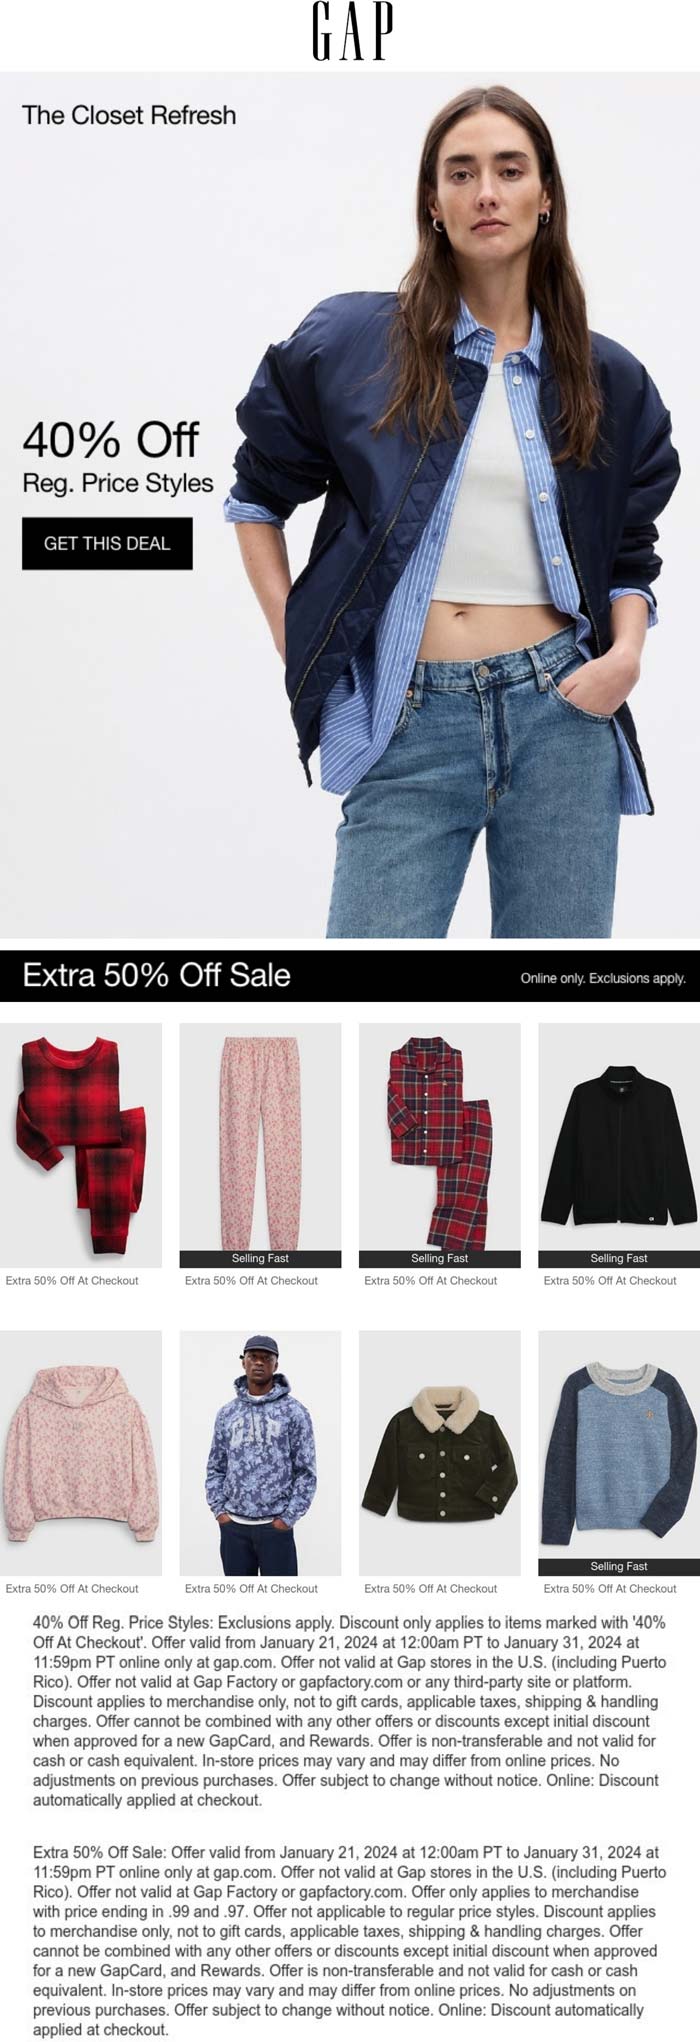 40% off regular & extra 50% off sale items online at Gap #gap